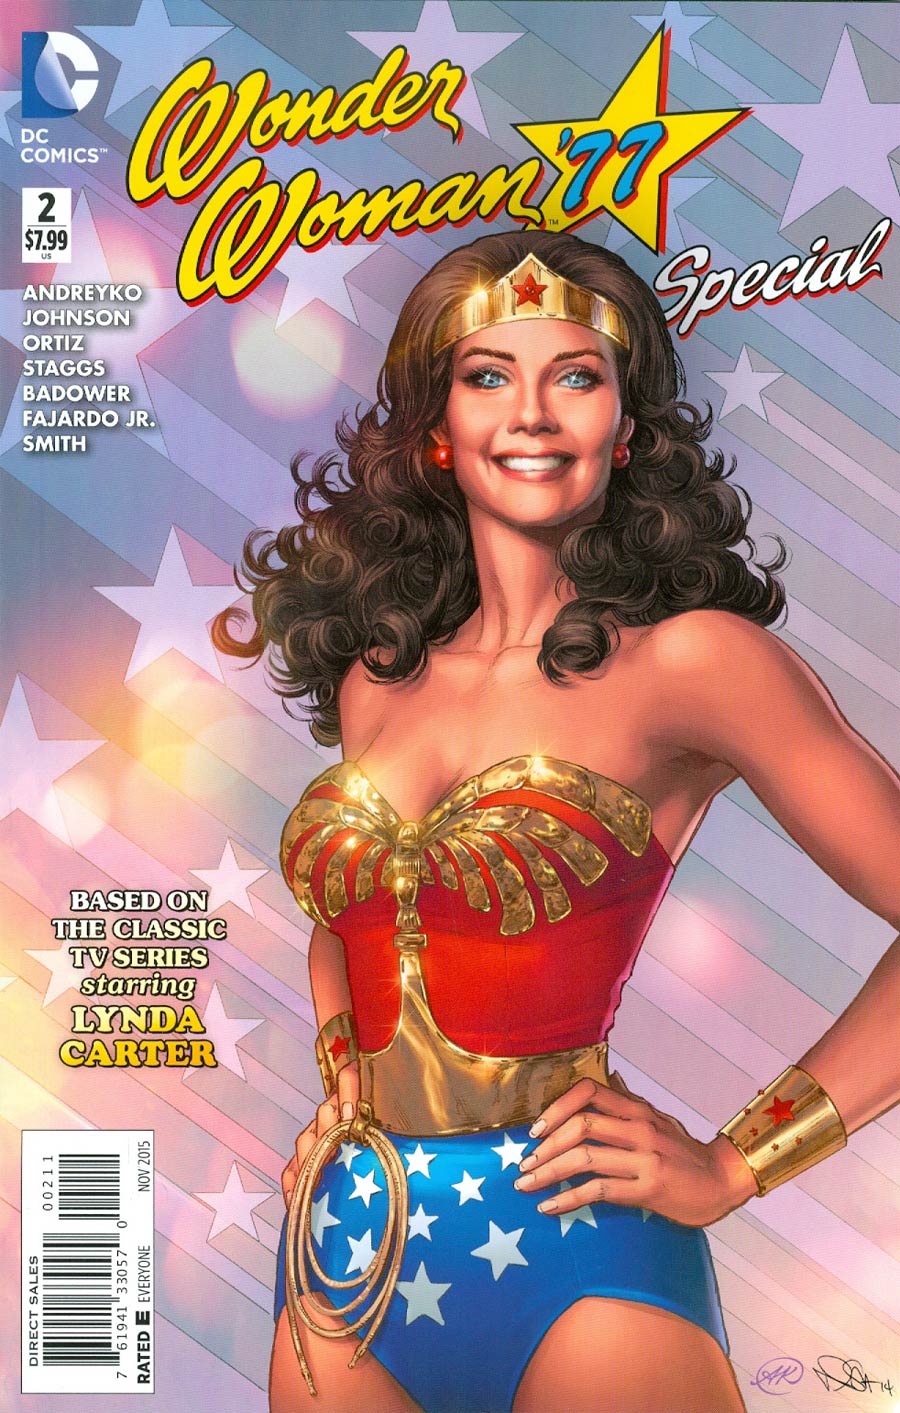 Wonder Woman 77 Special #2